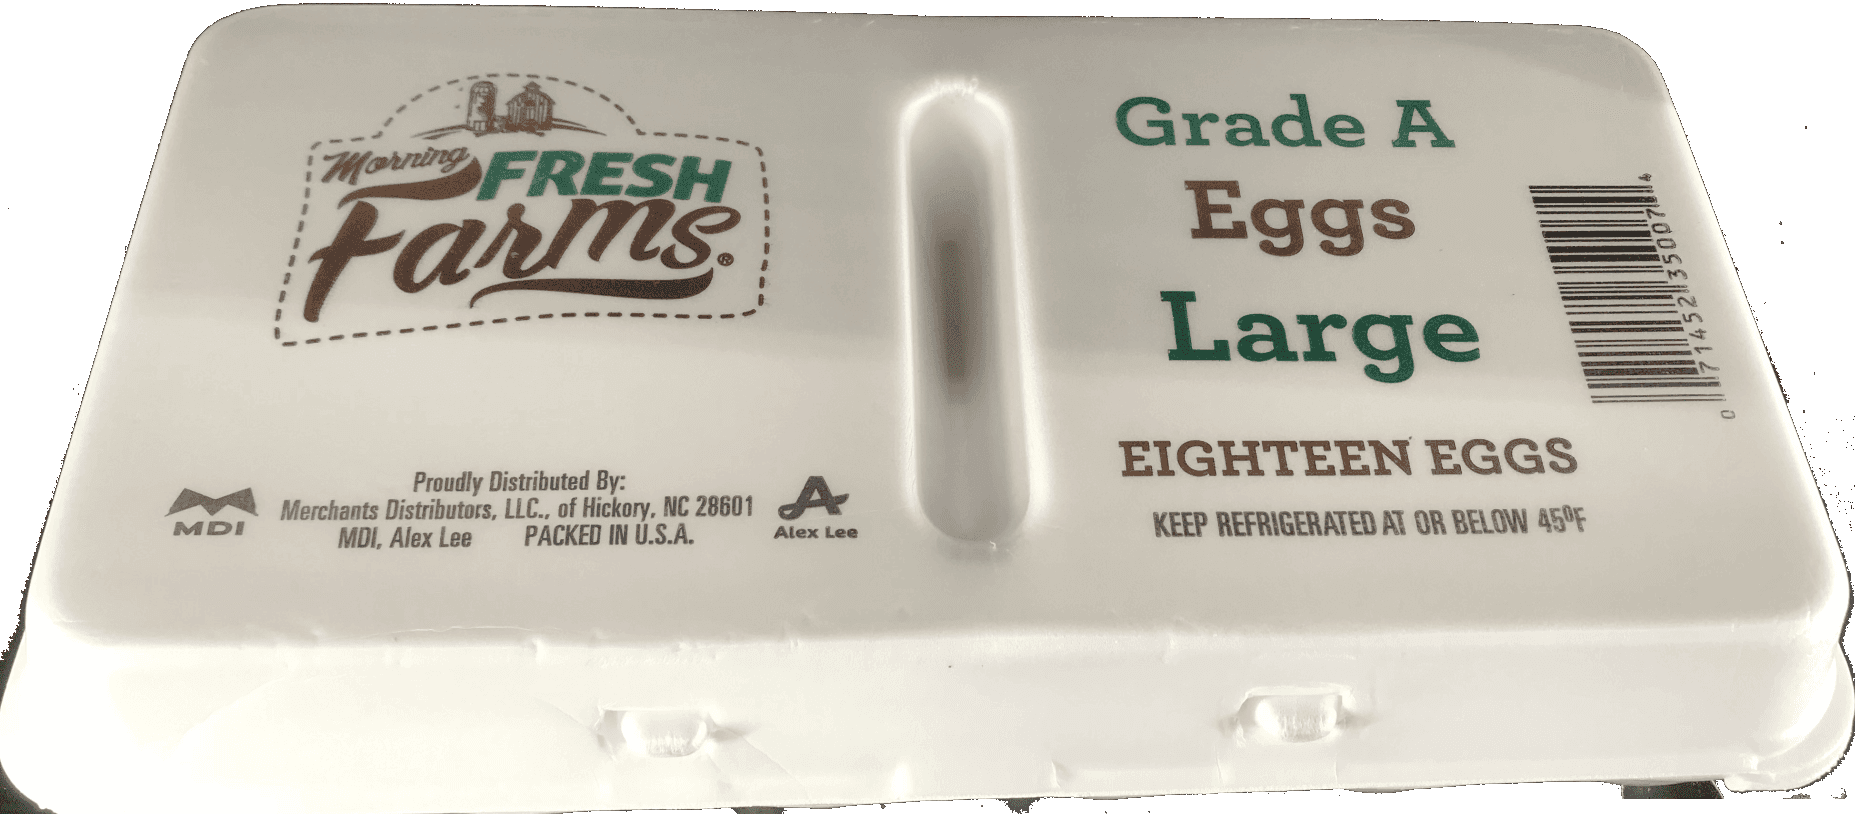 Morning Fresh Farms - Eggs Large Grade A